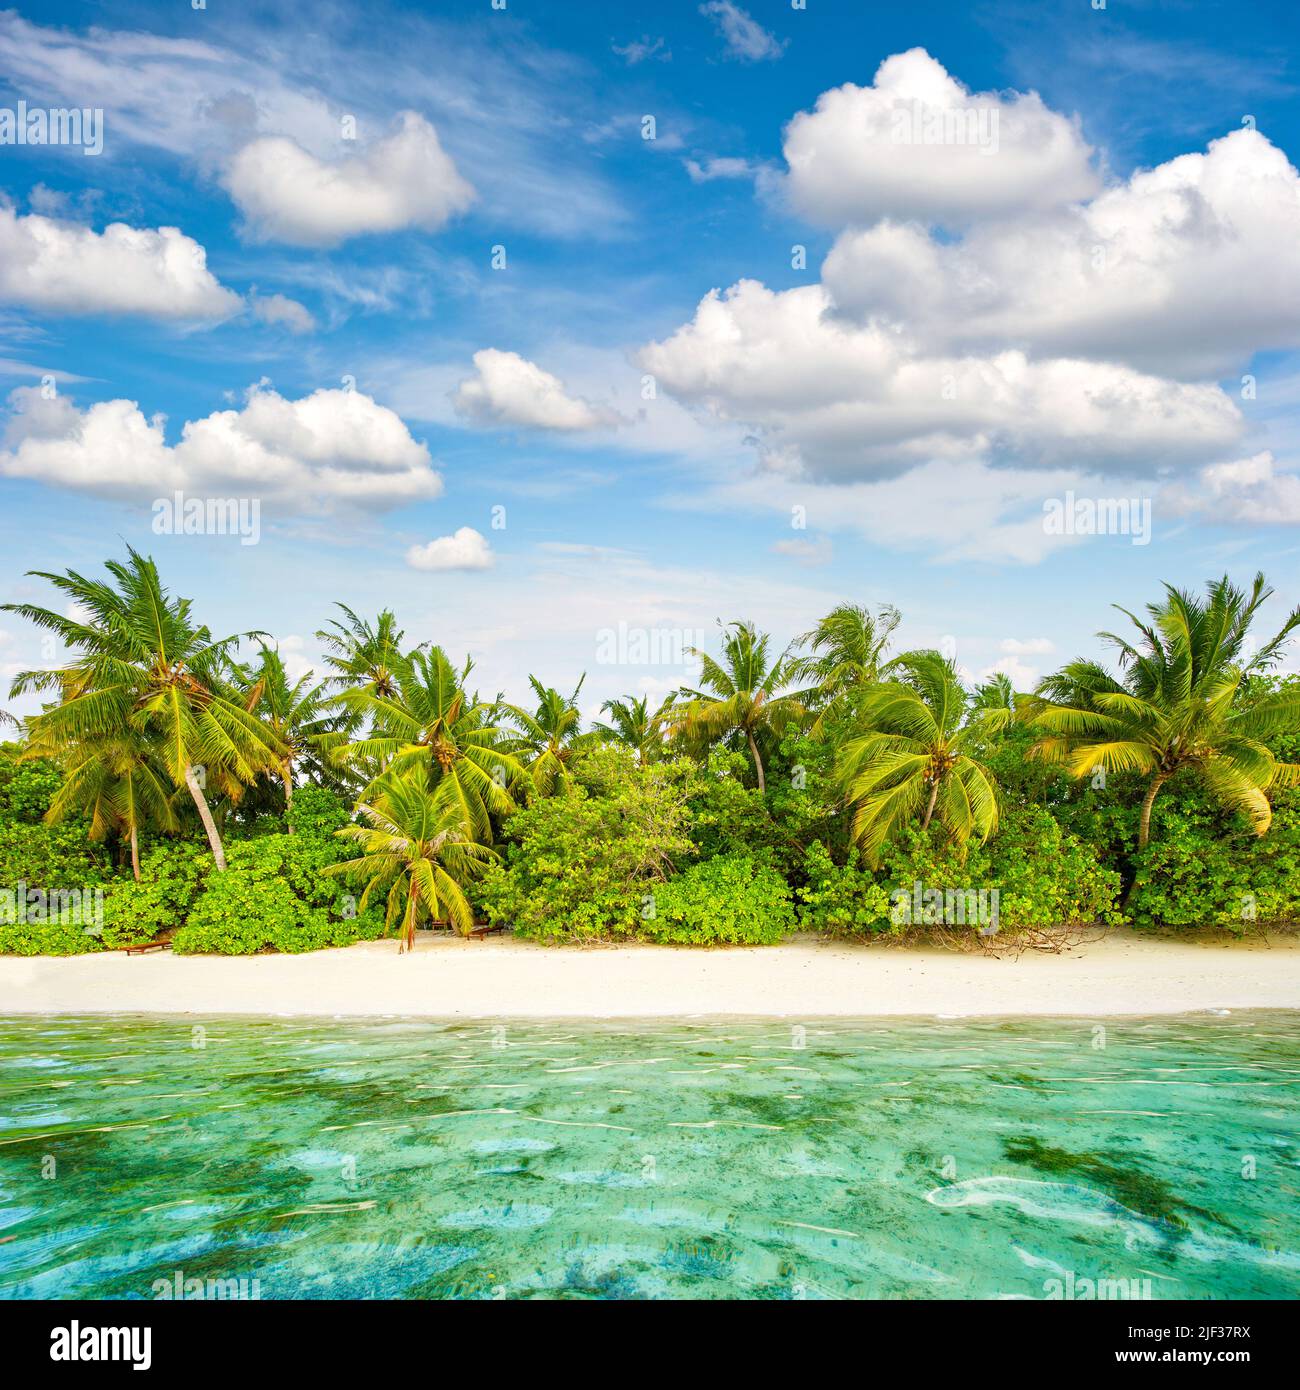 Summer vacation. Sand Beach. Palm Trees. Cloudy blue sky. Tropical island landscape Stock Photo